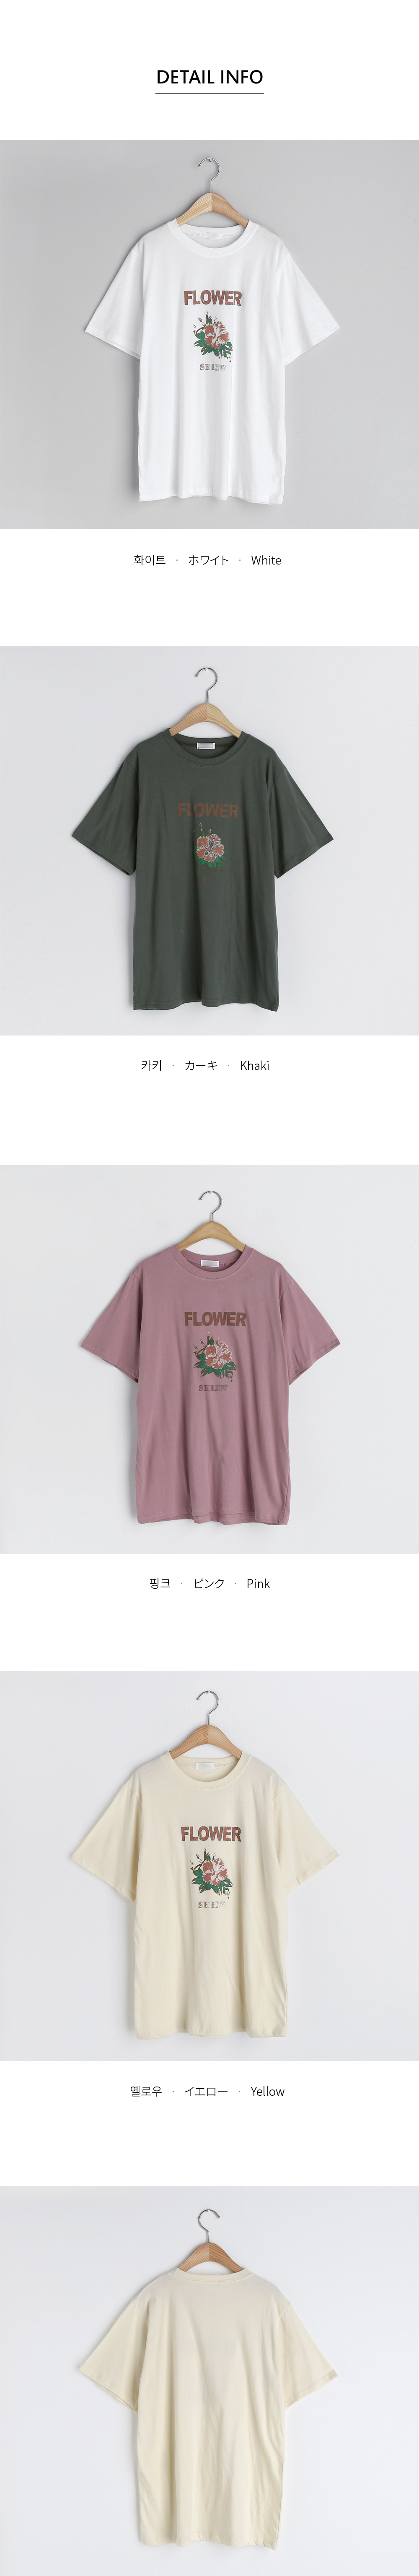 FLOFWERプリントTシャツ・全4色 | DHOLIC | 詳細画像10